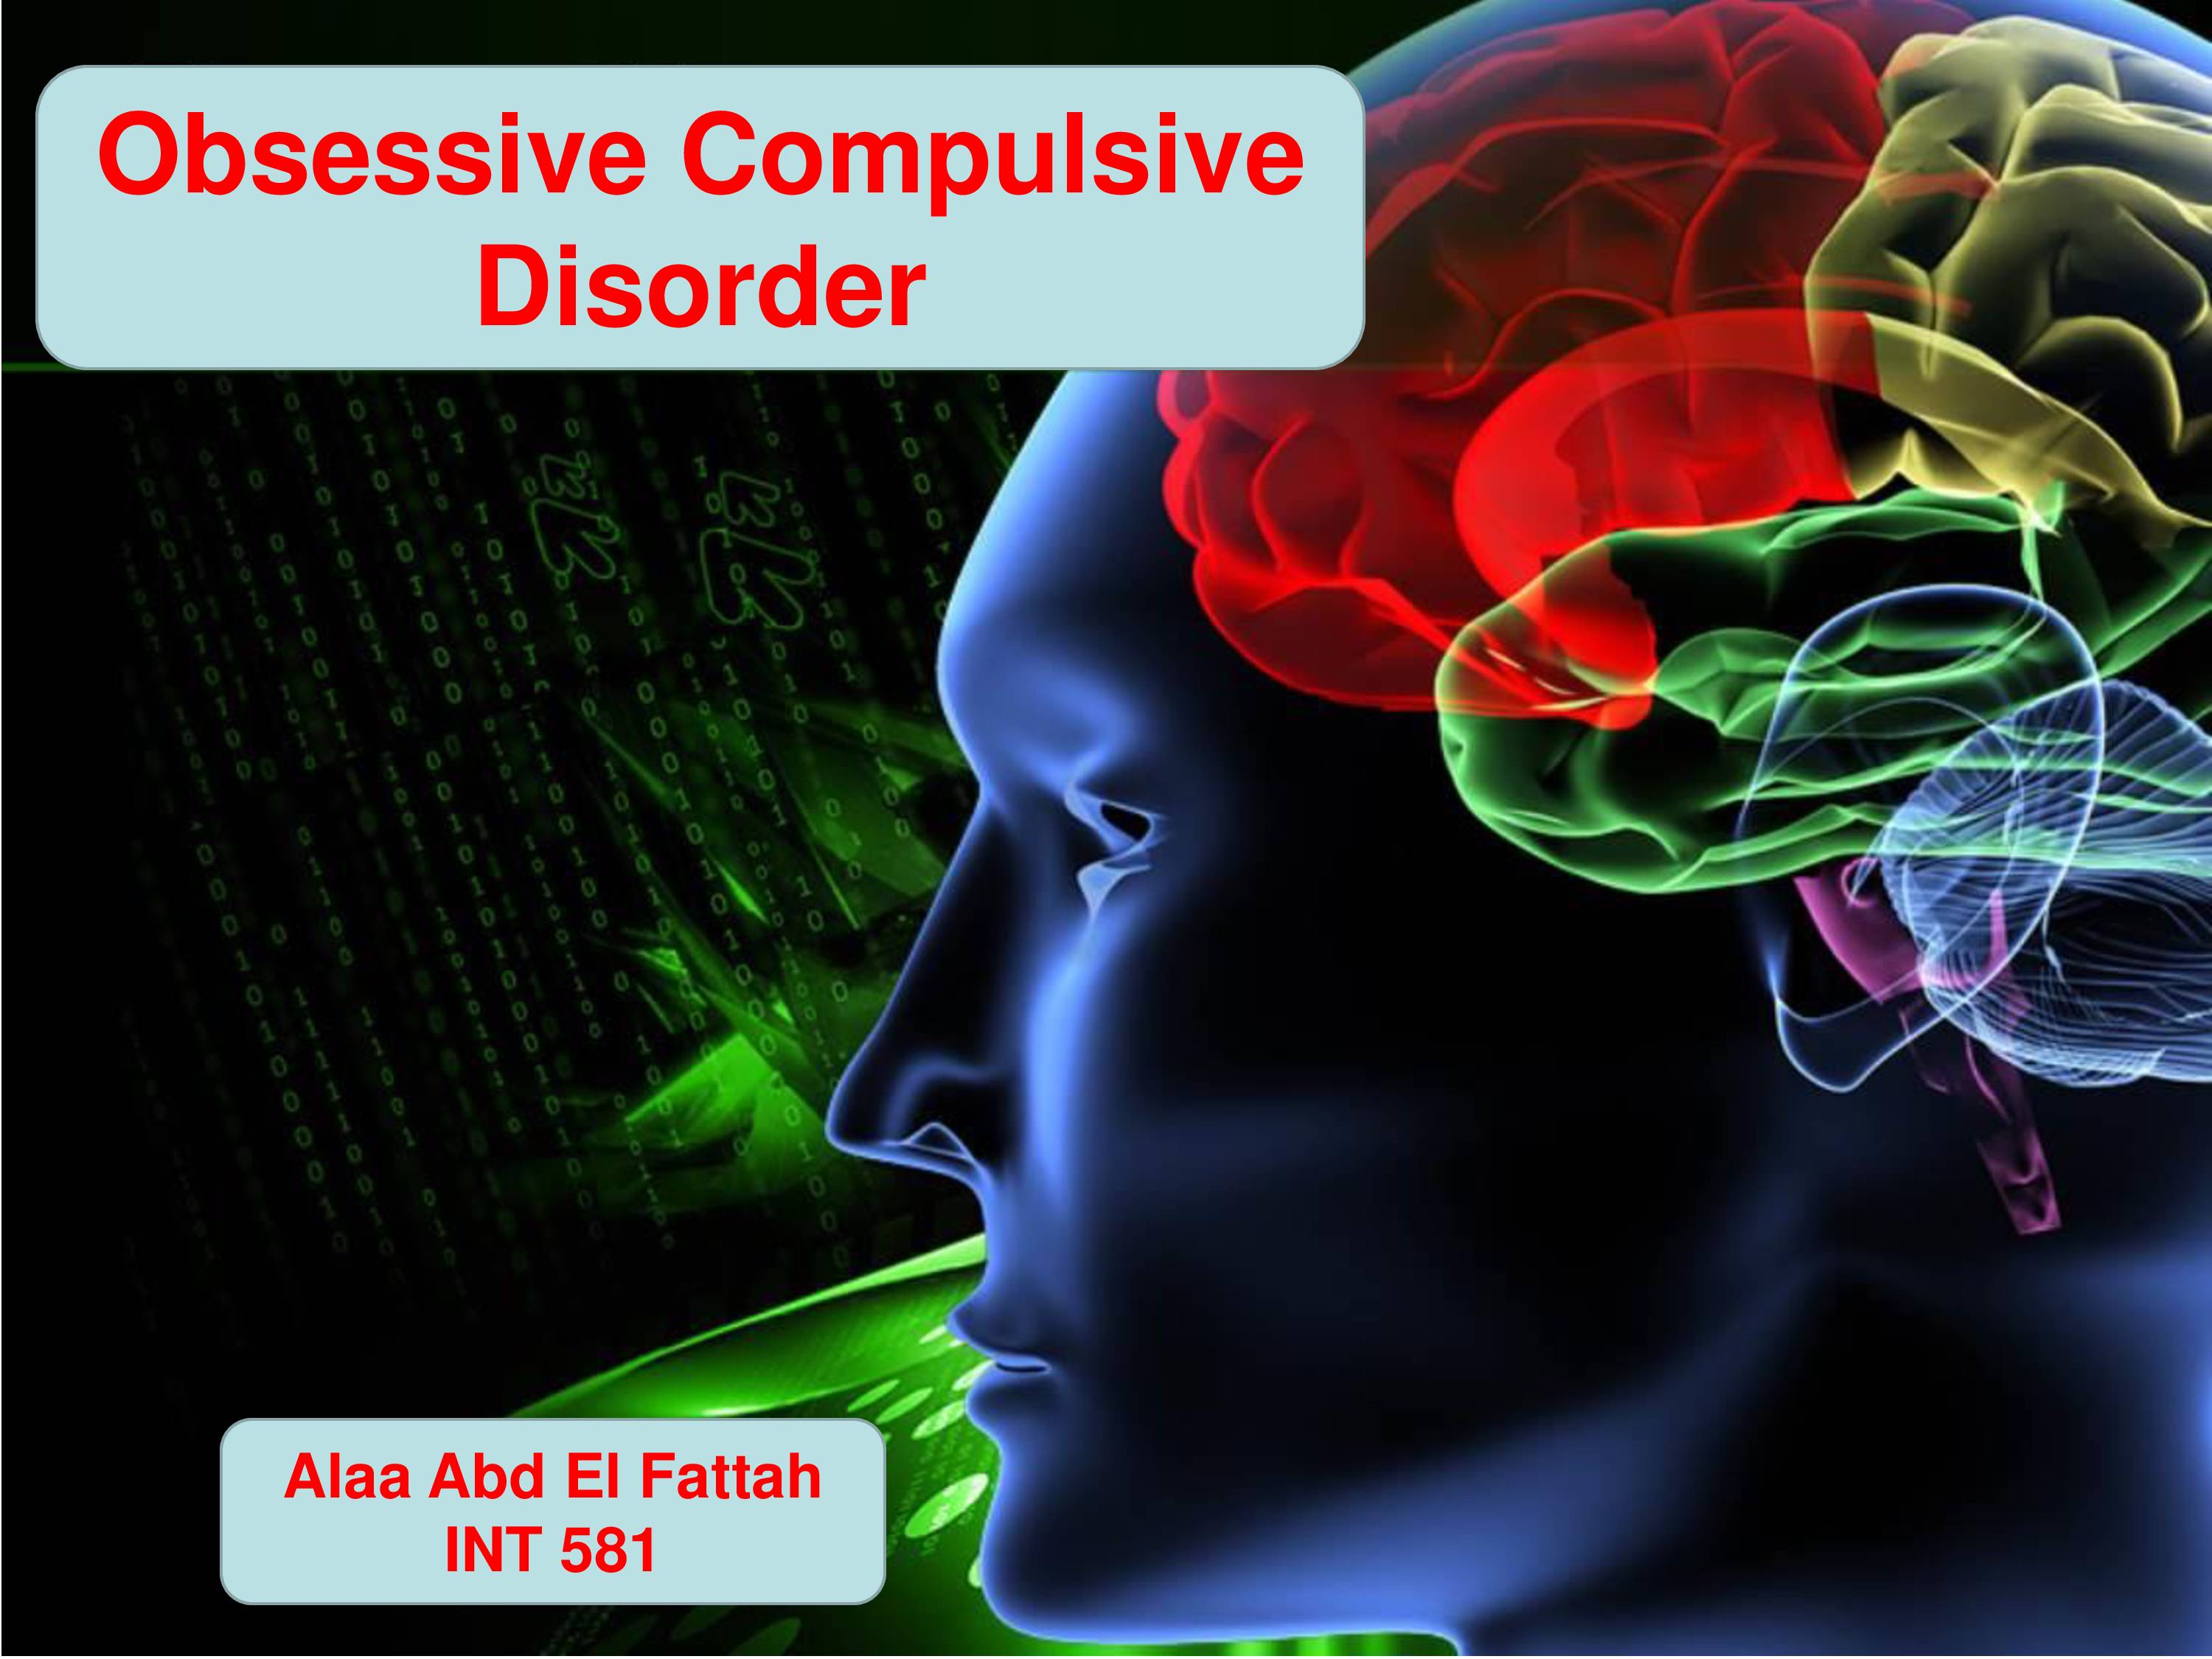 PPT on Obsessive compulsive disorder